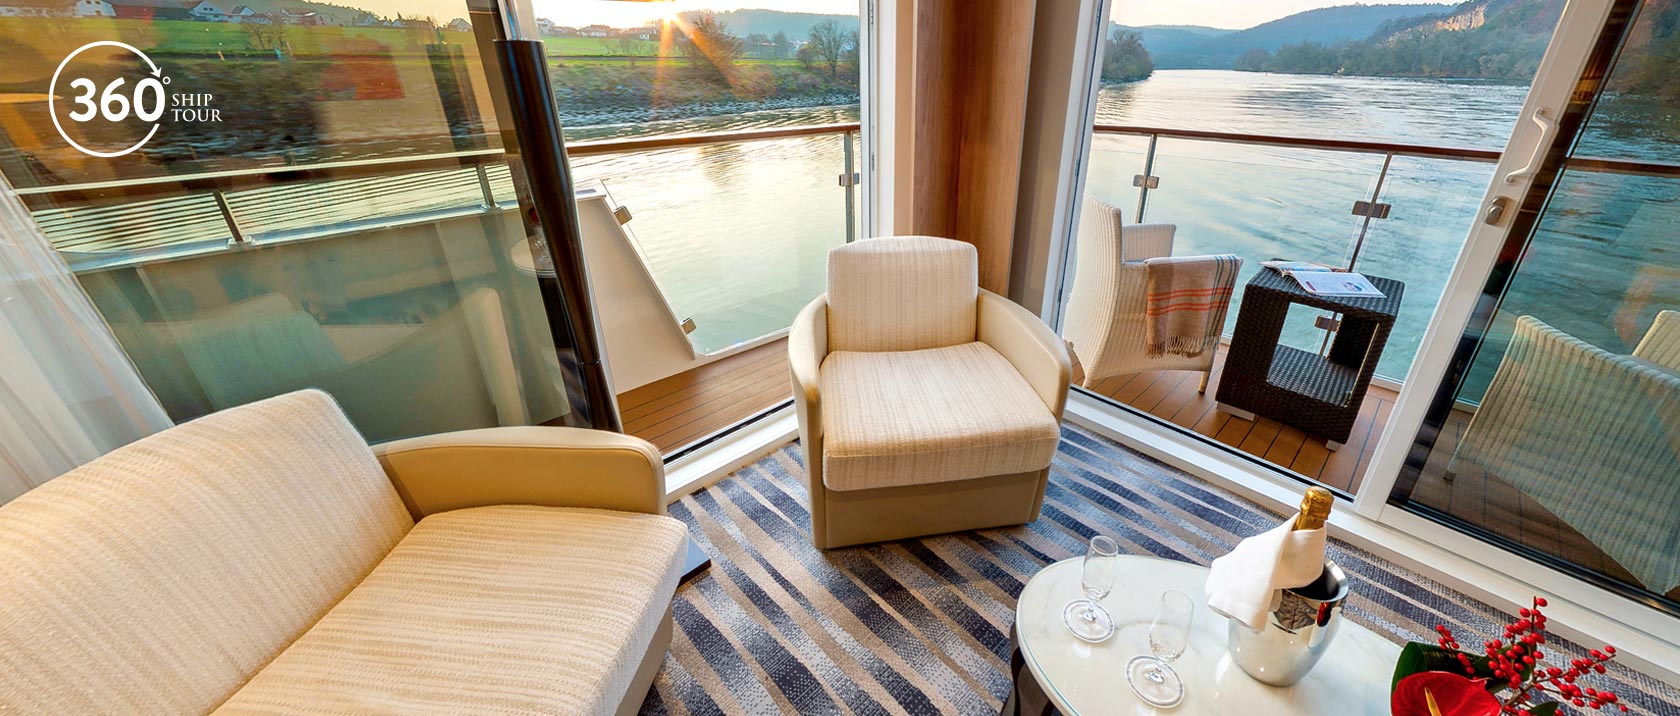 viking river cruise room photos